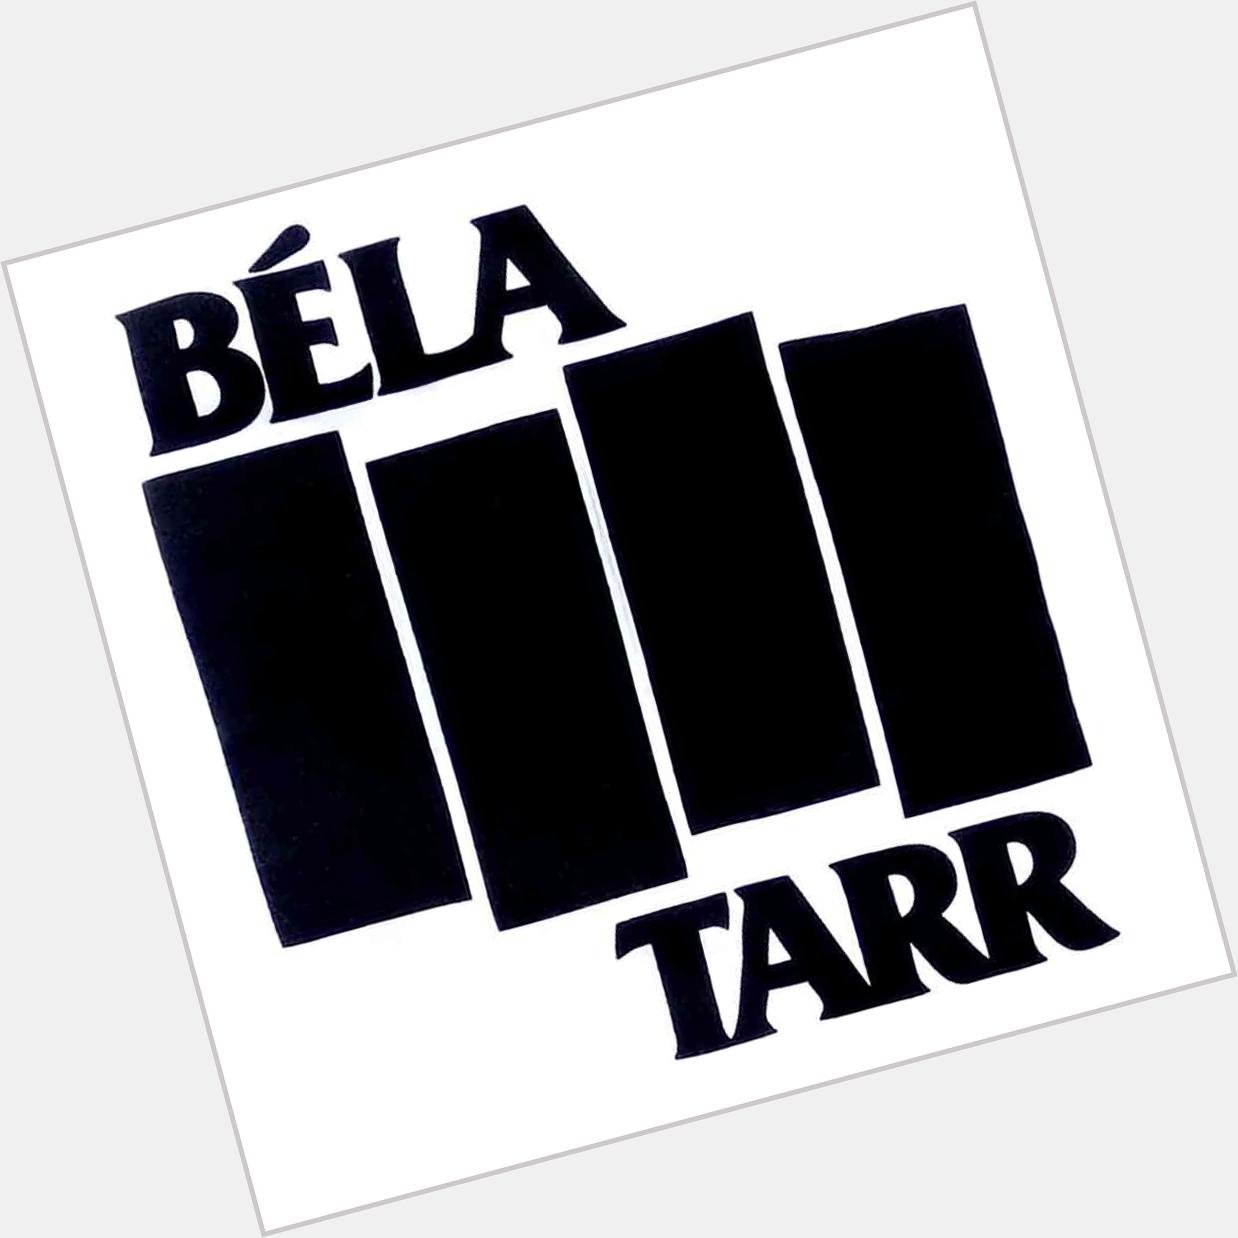 Happy birthday, Béla Tarr! Filmmaker of Sátántangó & Werckmeister Harmonies. Maybe fan too? 